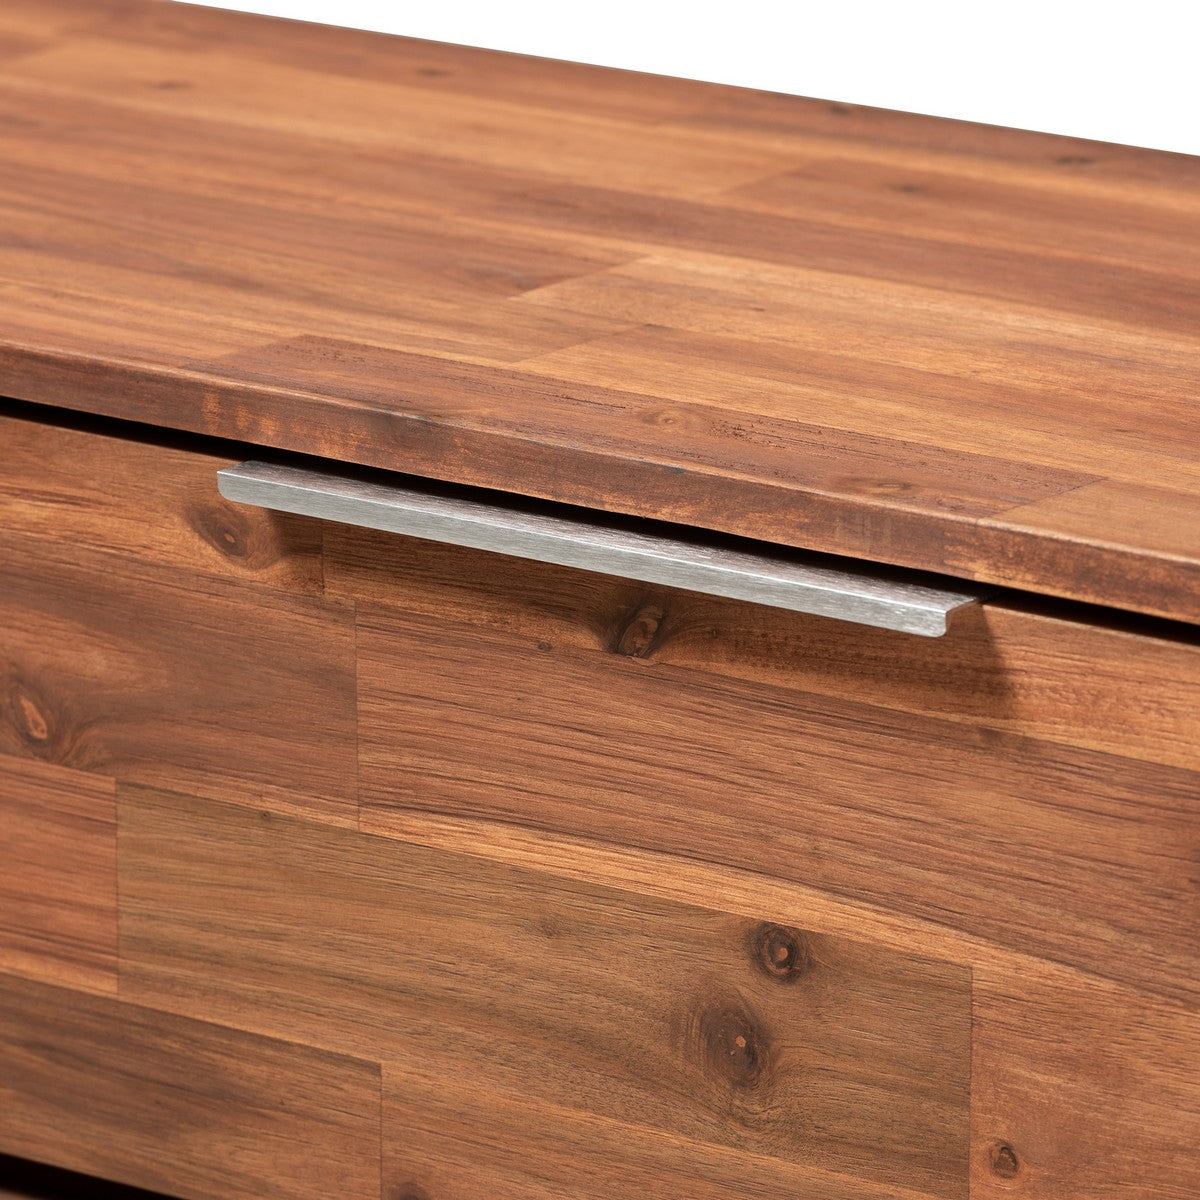 Baxton Studio Austin Modern and Contemporary Caramel Brown Finished 6-Drawer Wood Dresser